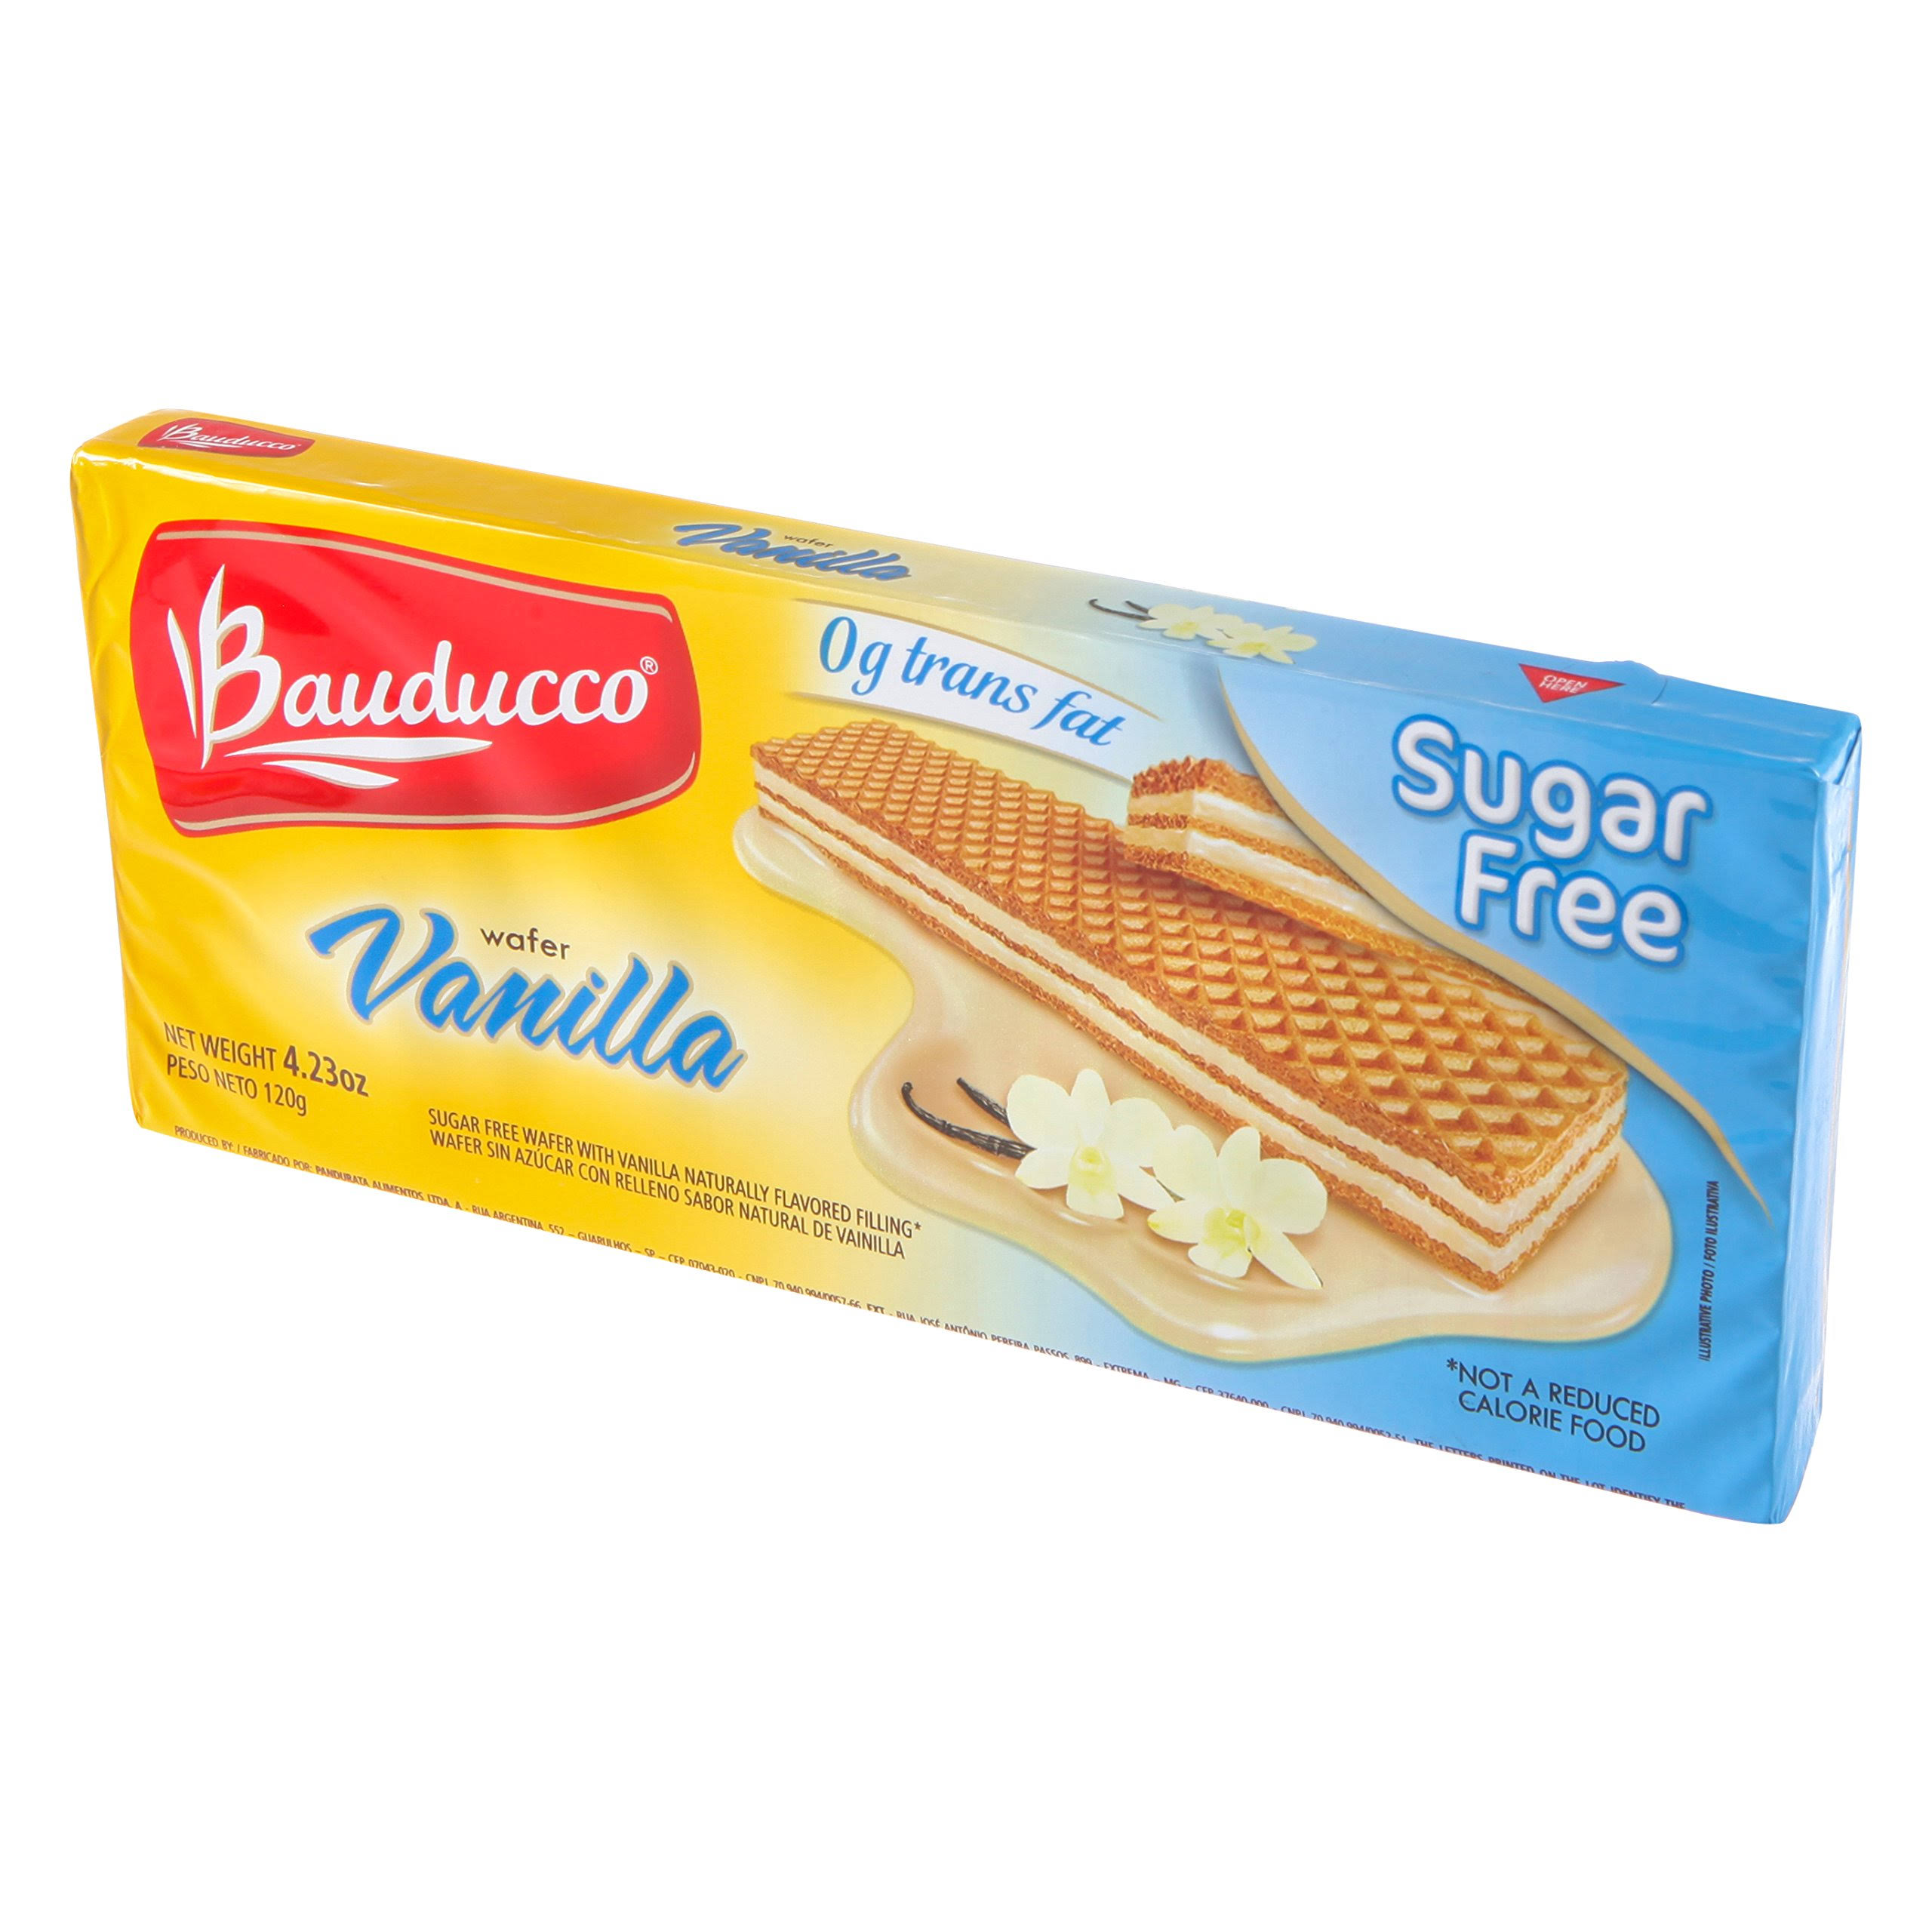 Bauducco Wafer, Sugar Free, Vanilla - 4.2 oz